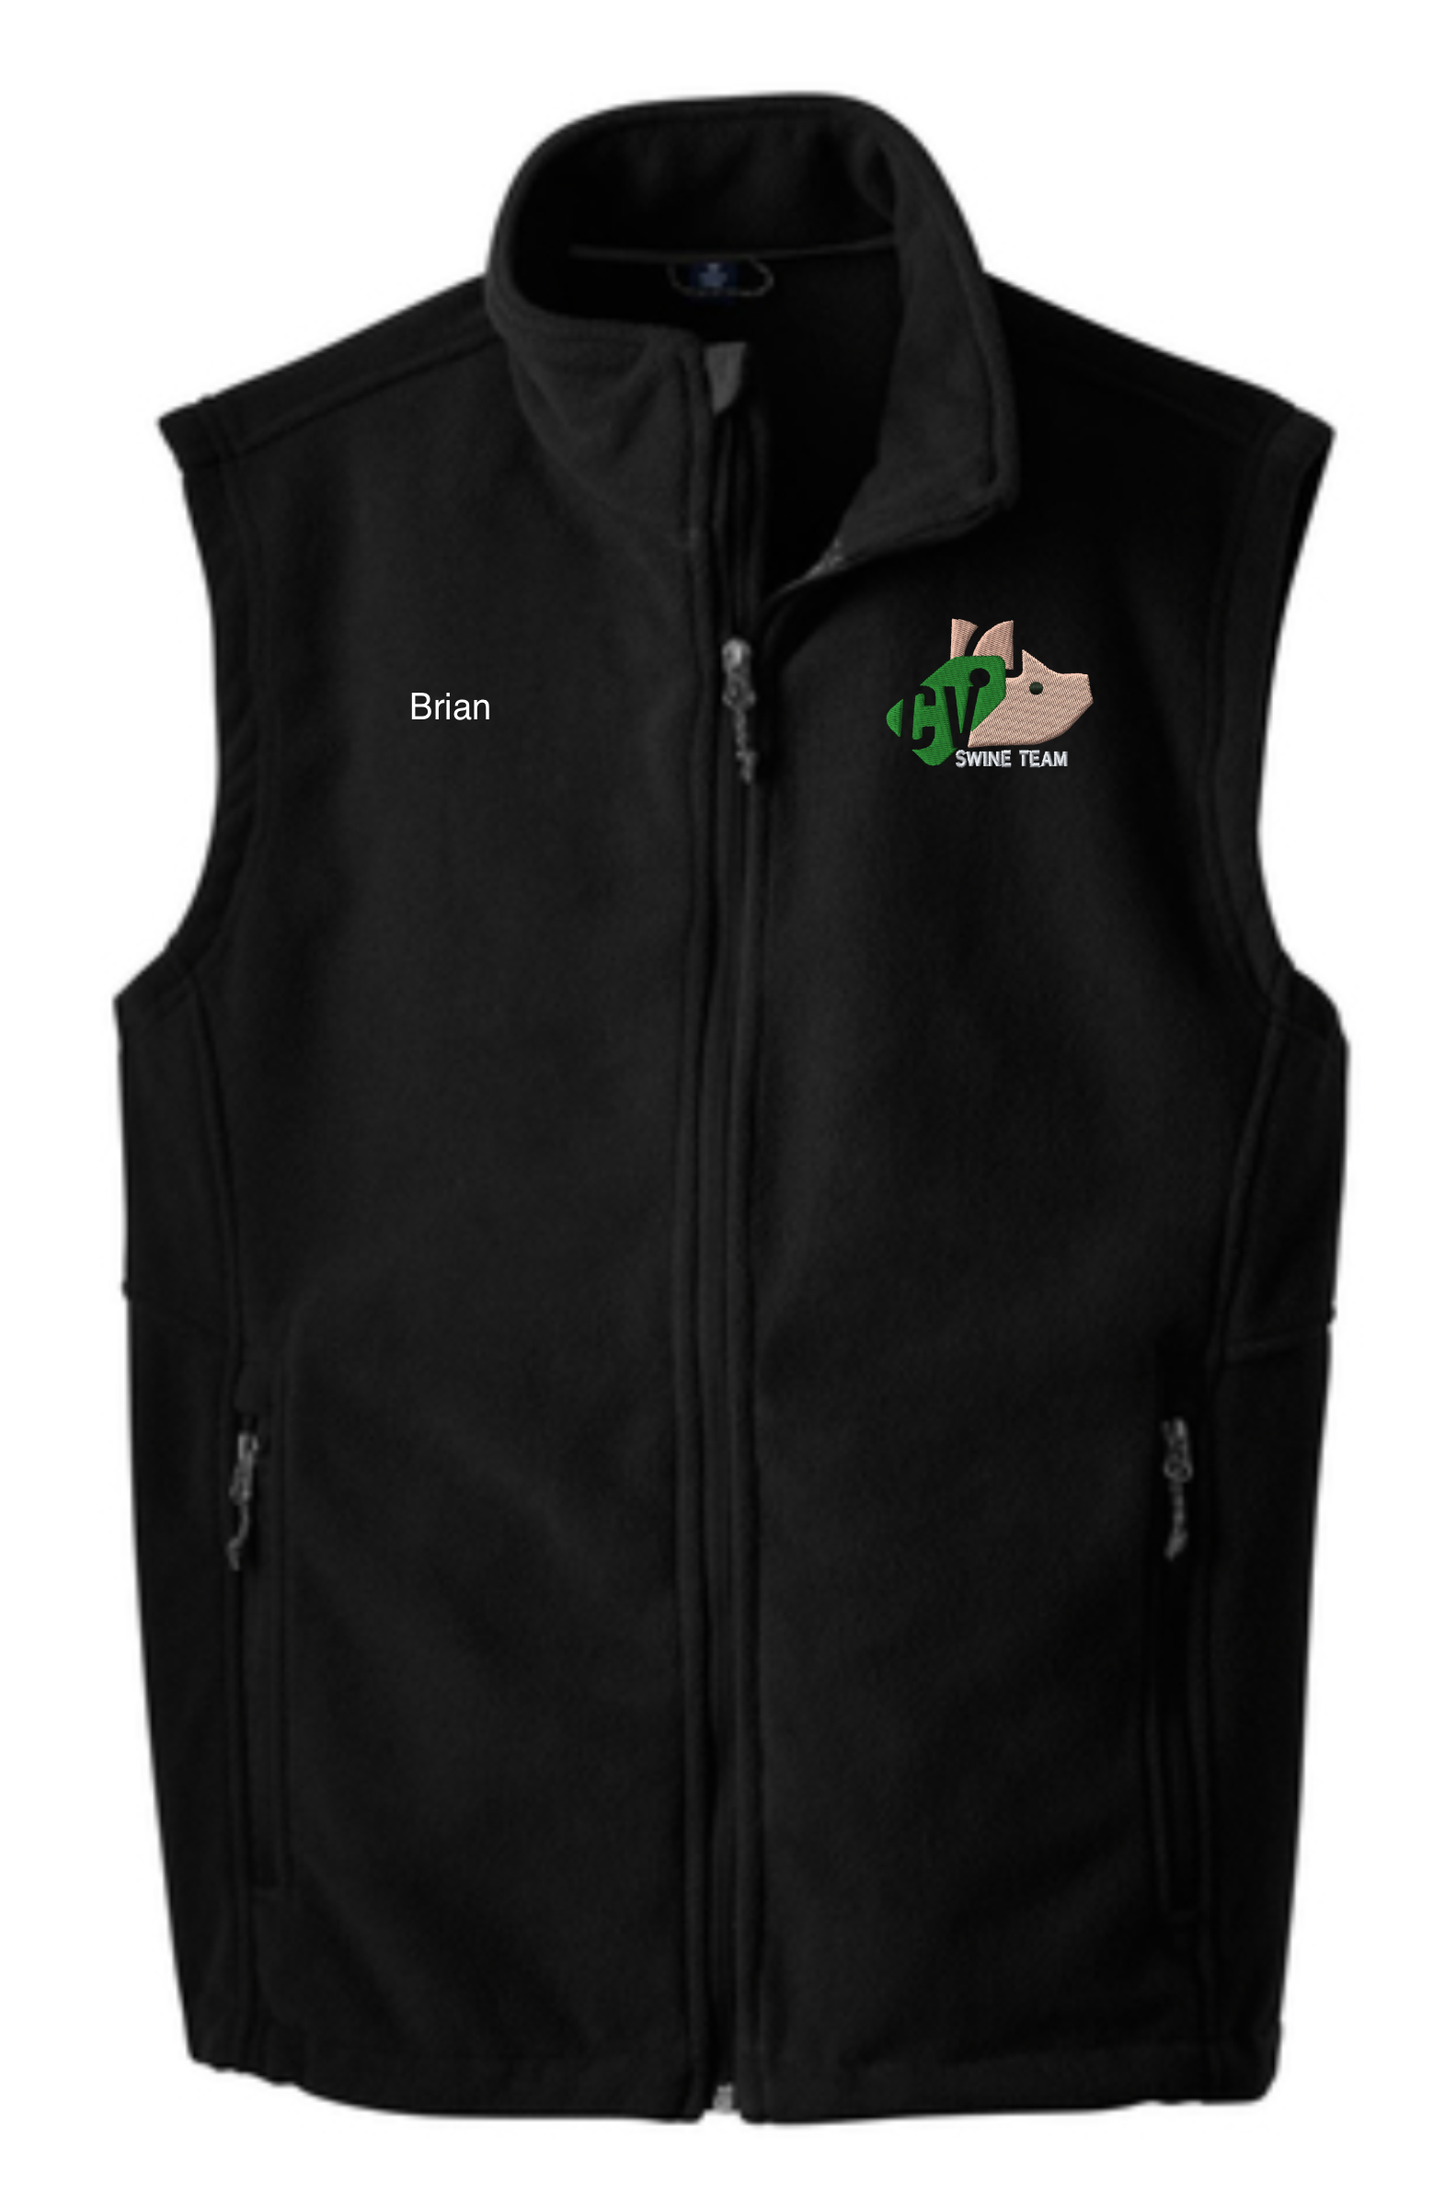 Youth Carmel Valley Swine Team Personalized 4-H Port Authority Fleece Vest